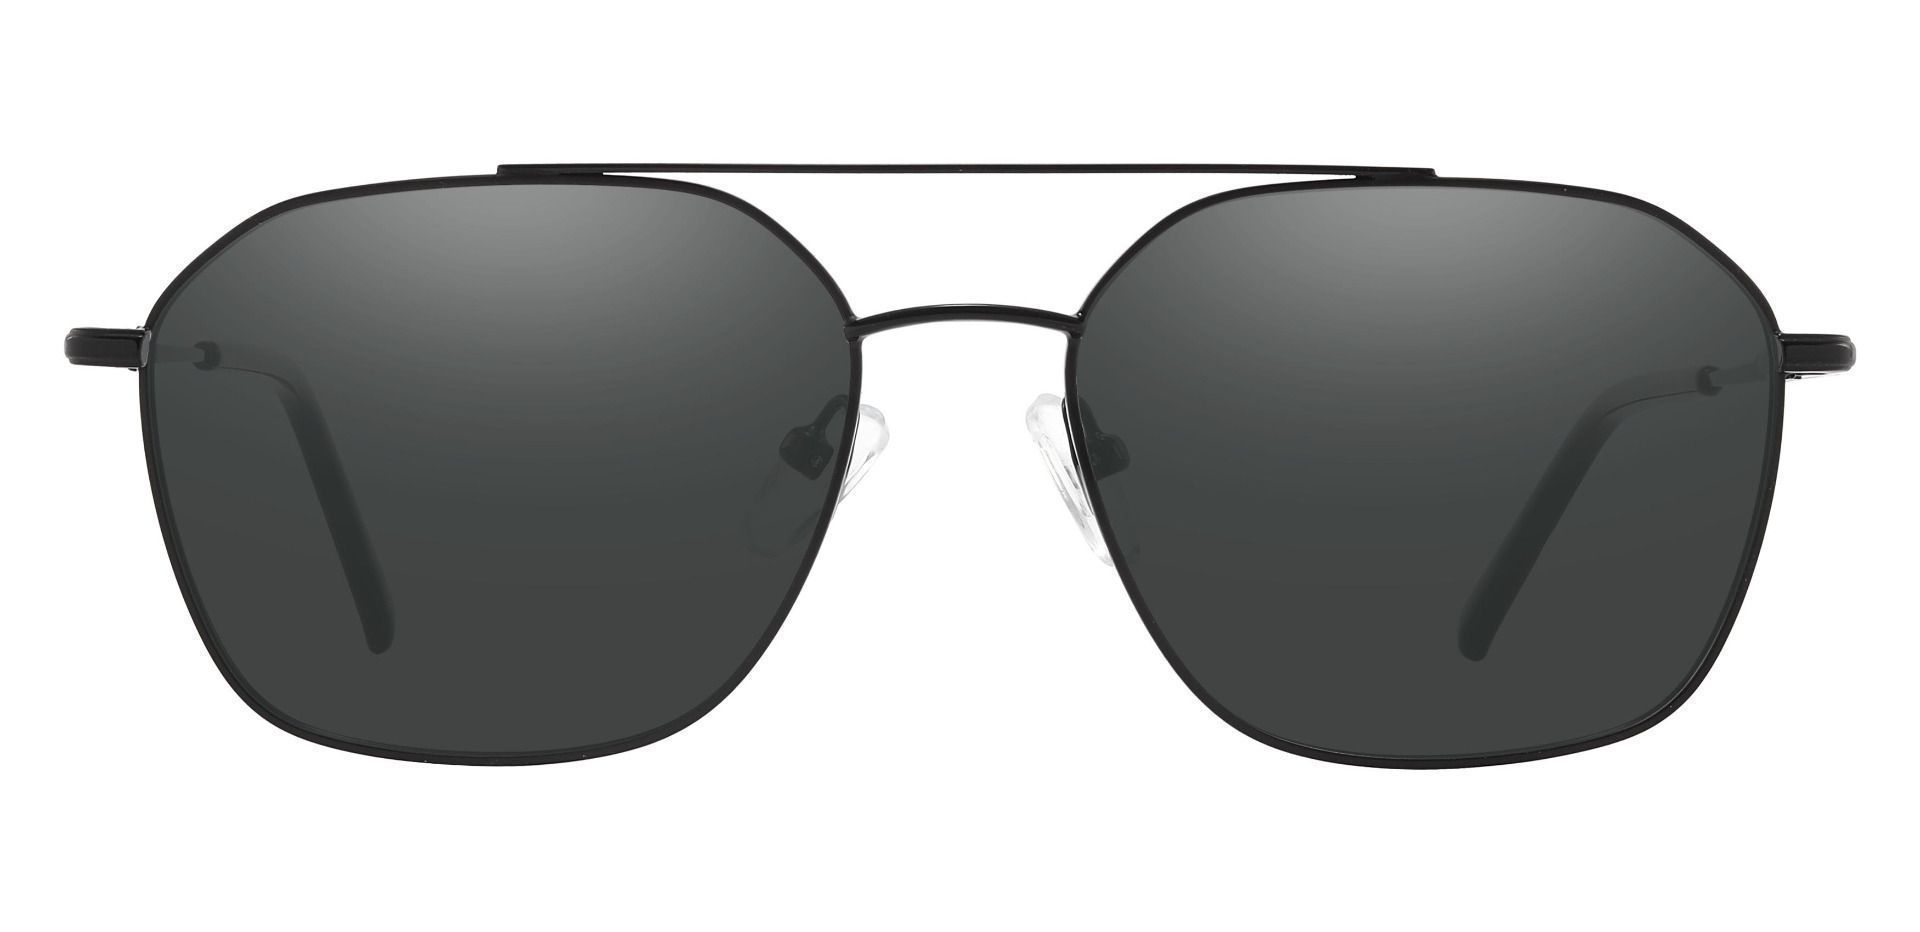 Harvey Aviator Prescription Sunglasses - Black Frame With Gray Lenses